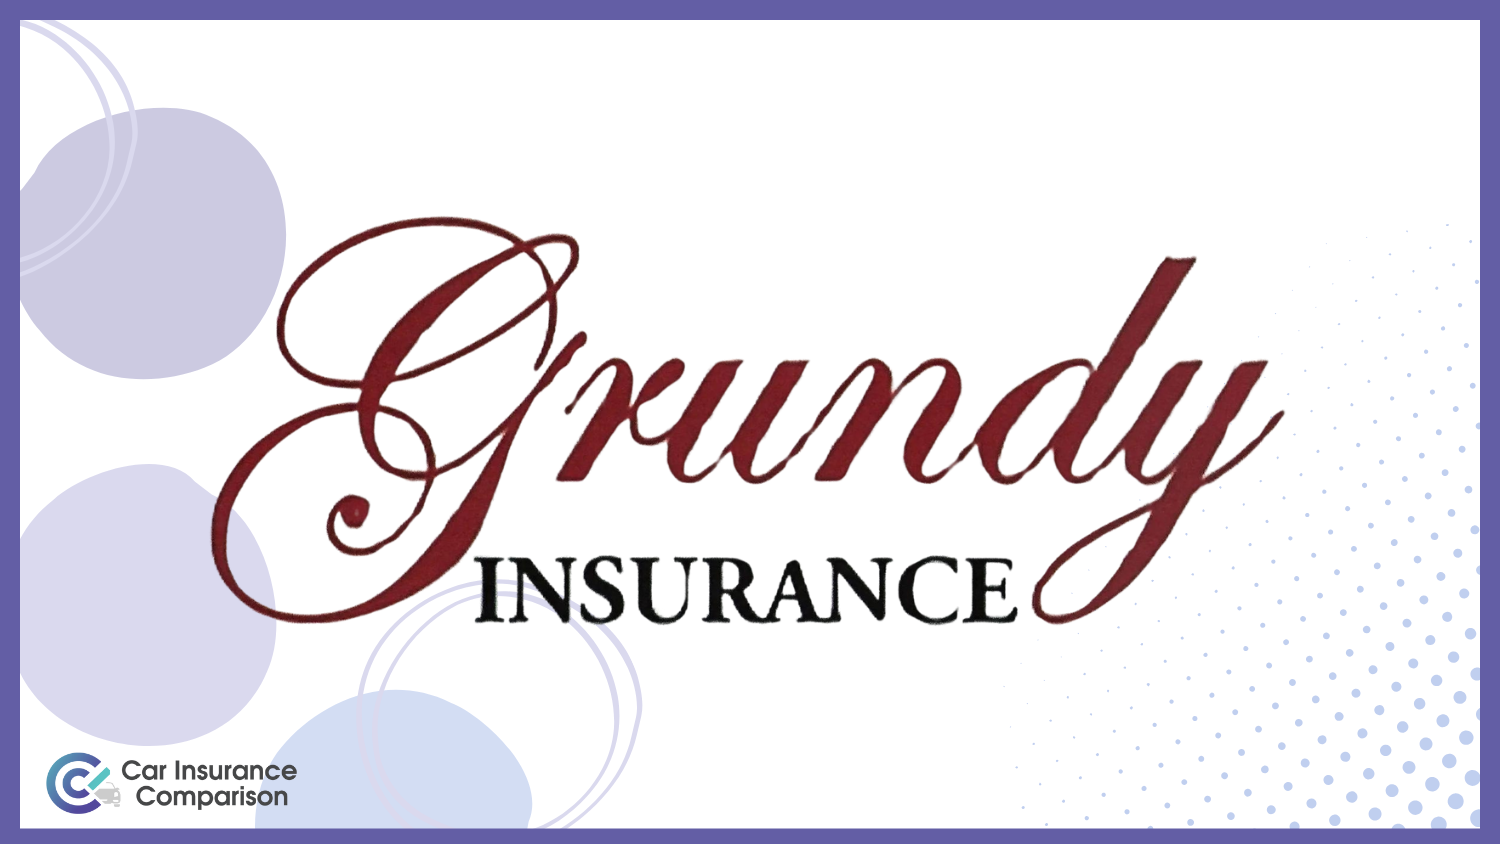 Grundy: Best Hot Rod Car Insurance